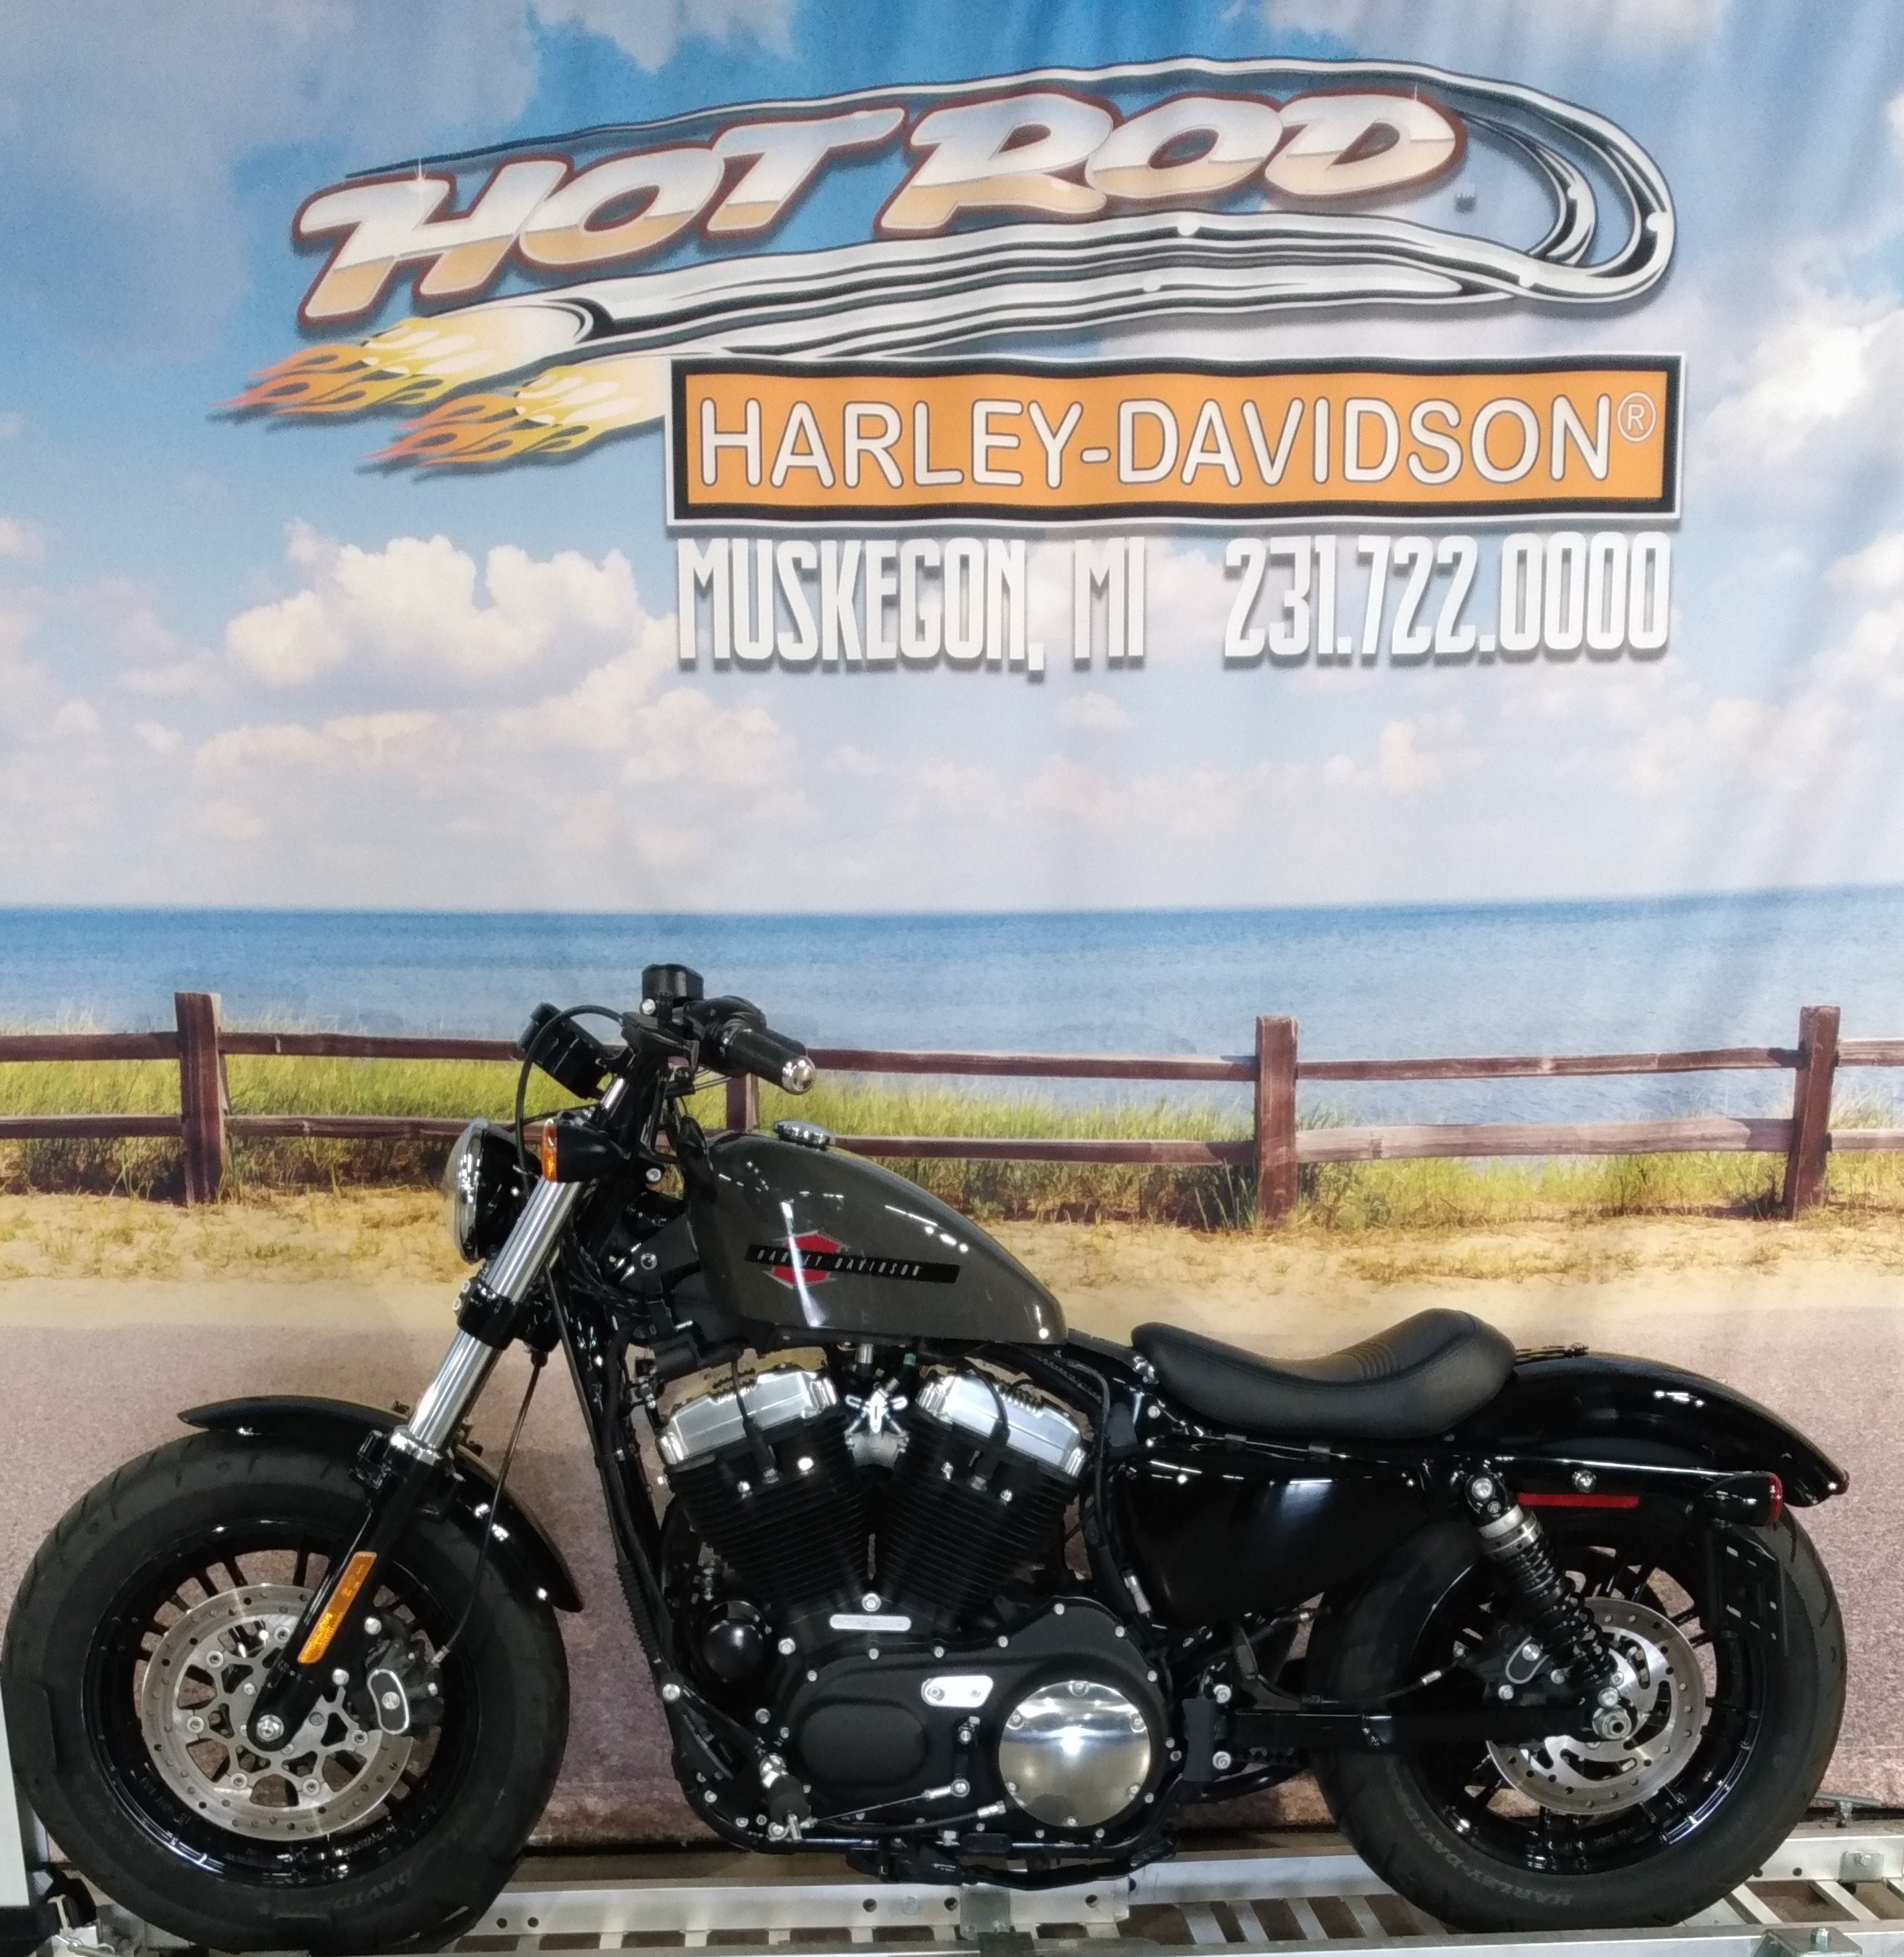 2019 Harley-Davidson Sportster Forty-Eight at Hot Rod Harley-Davidson